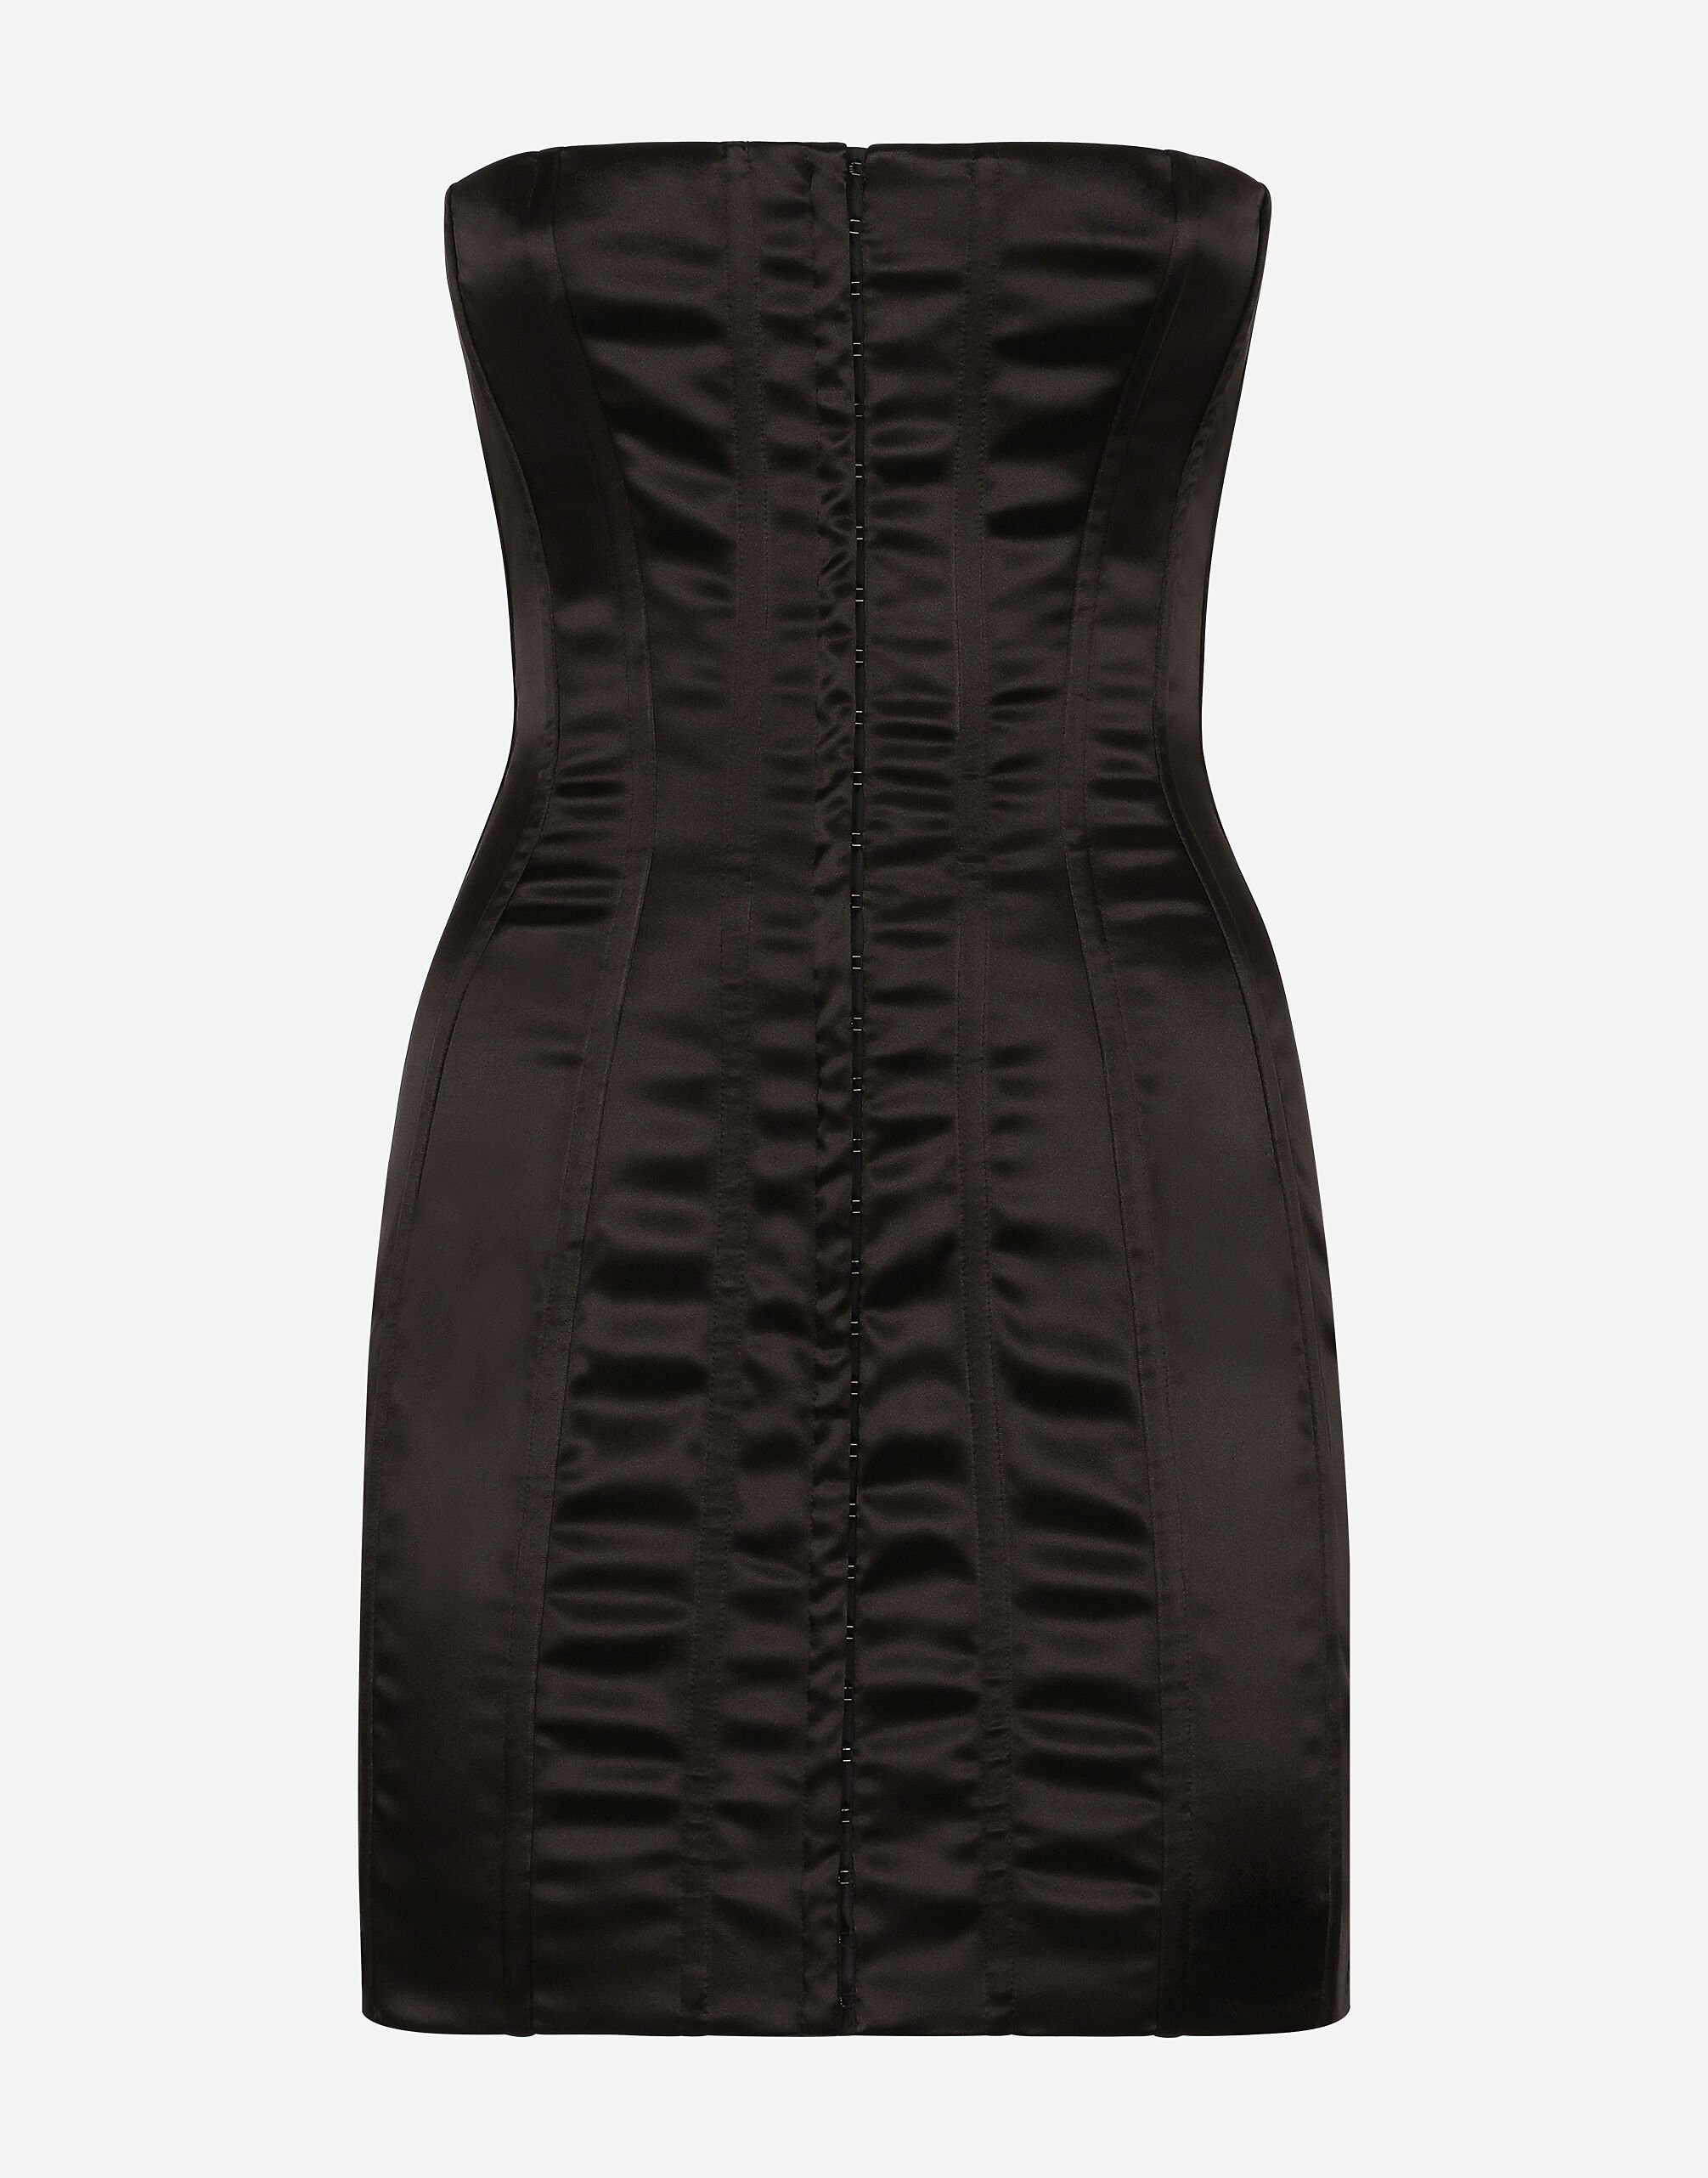 Dolce & Gabbana Short strapless satin dress Black F29XTTFUWD6